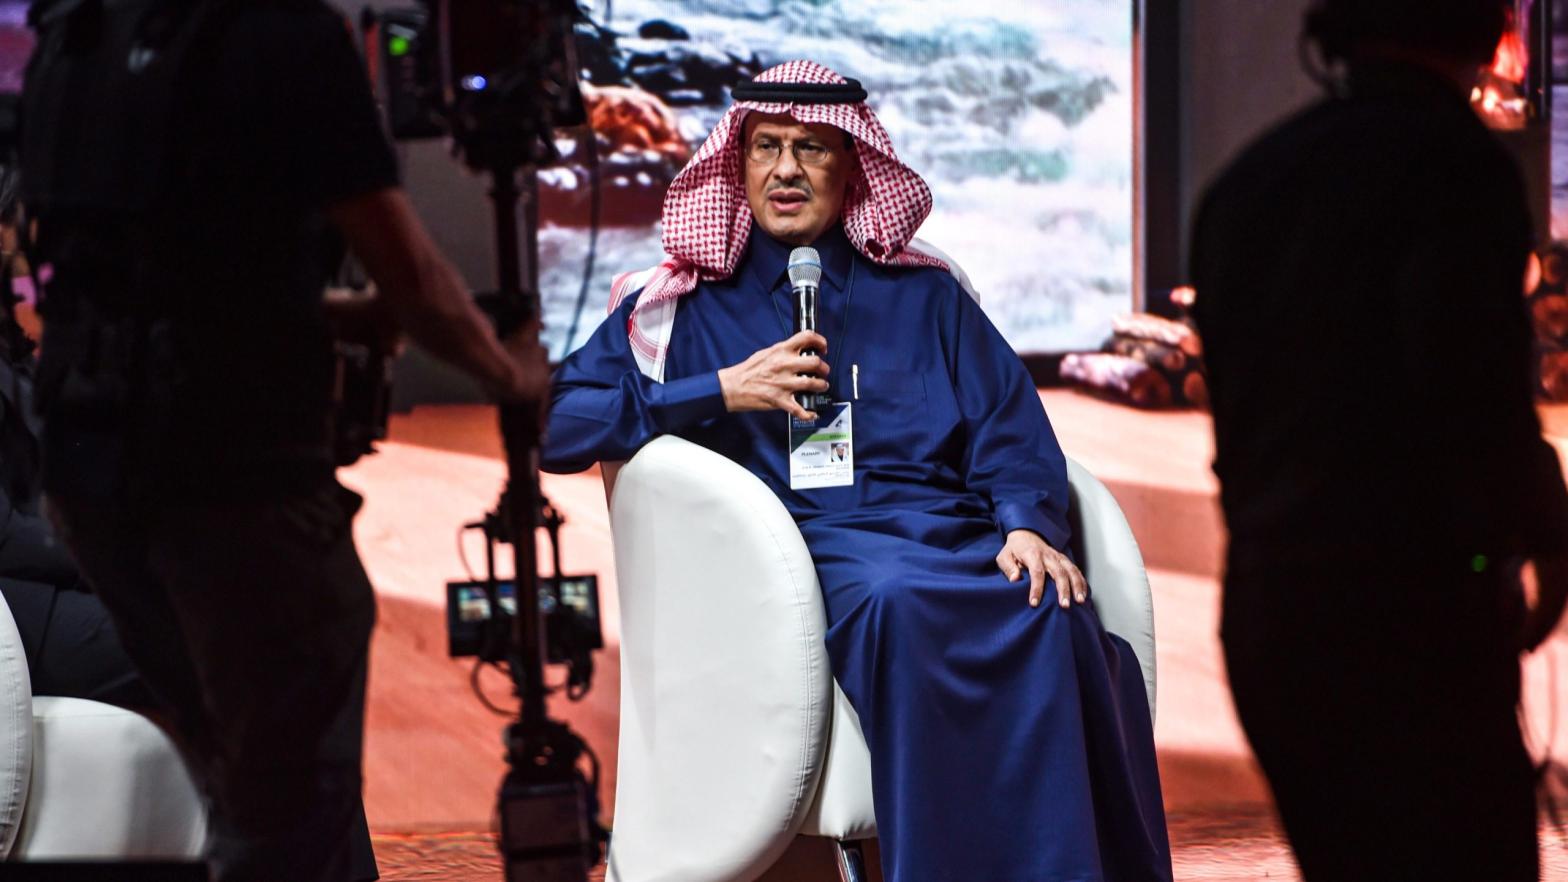 Saudi Energy Minister Abdulaziz bin Salman Al-Saud speaks at a conference in Riyadh on January 27, 2021. (Photo: Fayez Nuraldine/AFP, Getty Images)